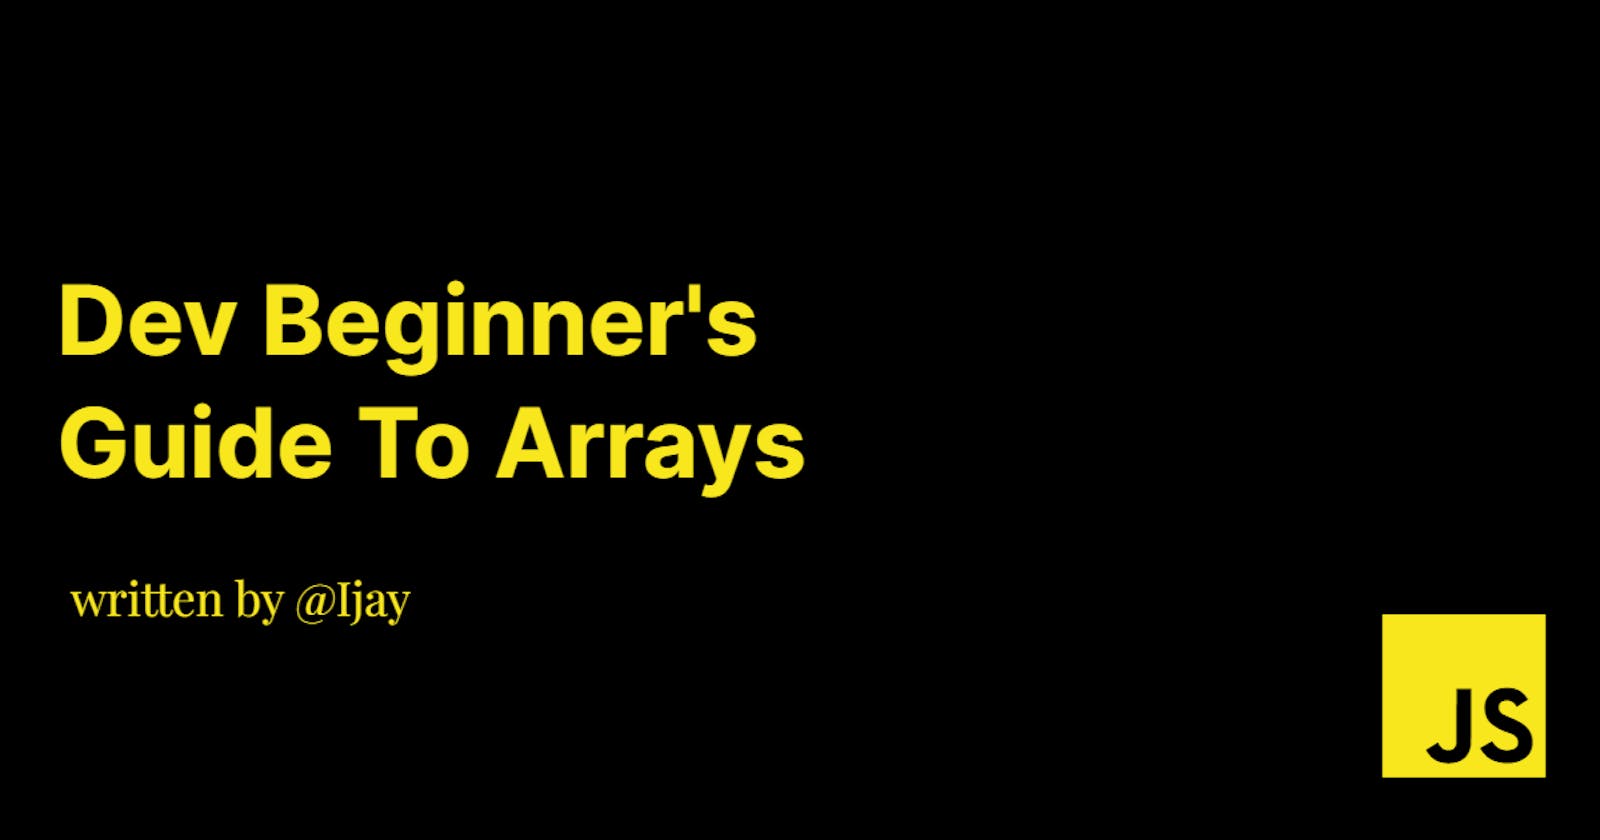 Dev Beginner's Guide To Arrays